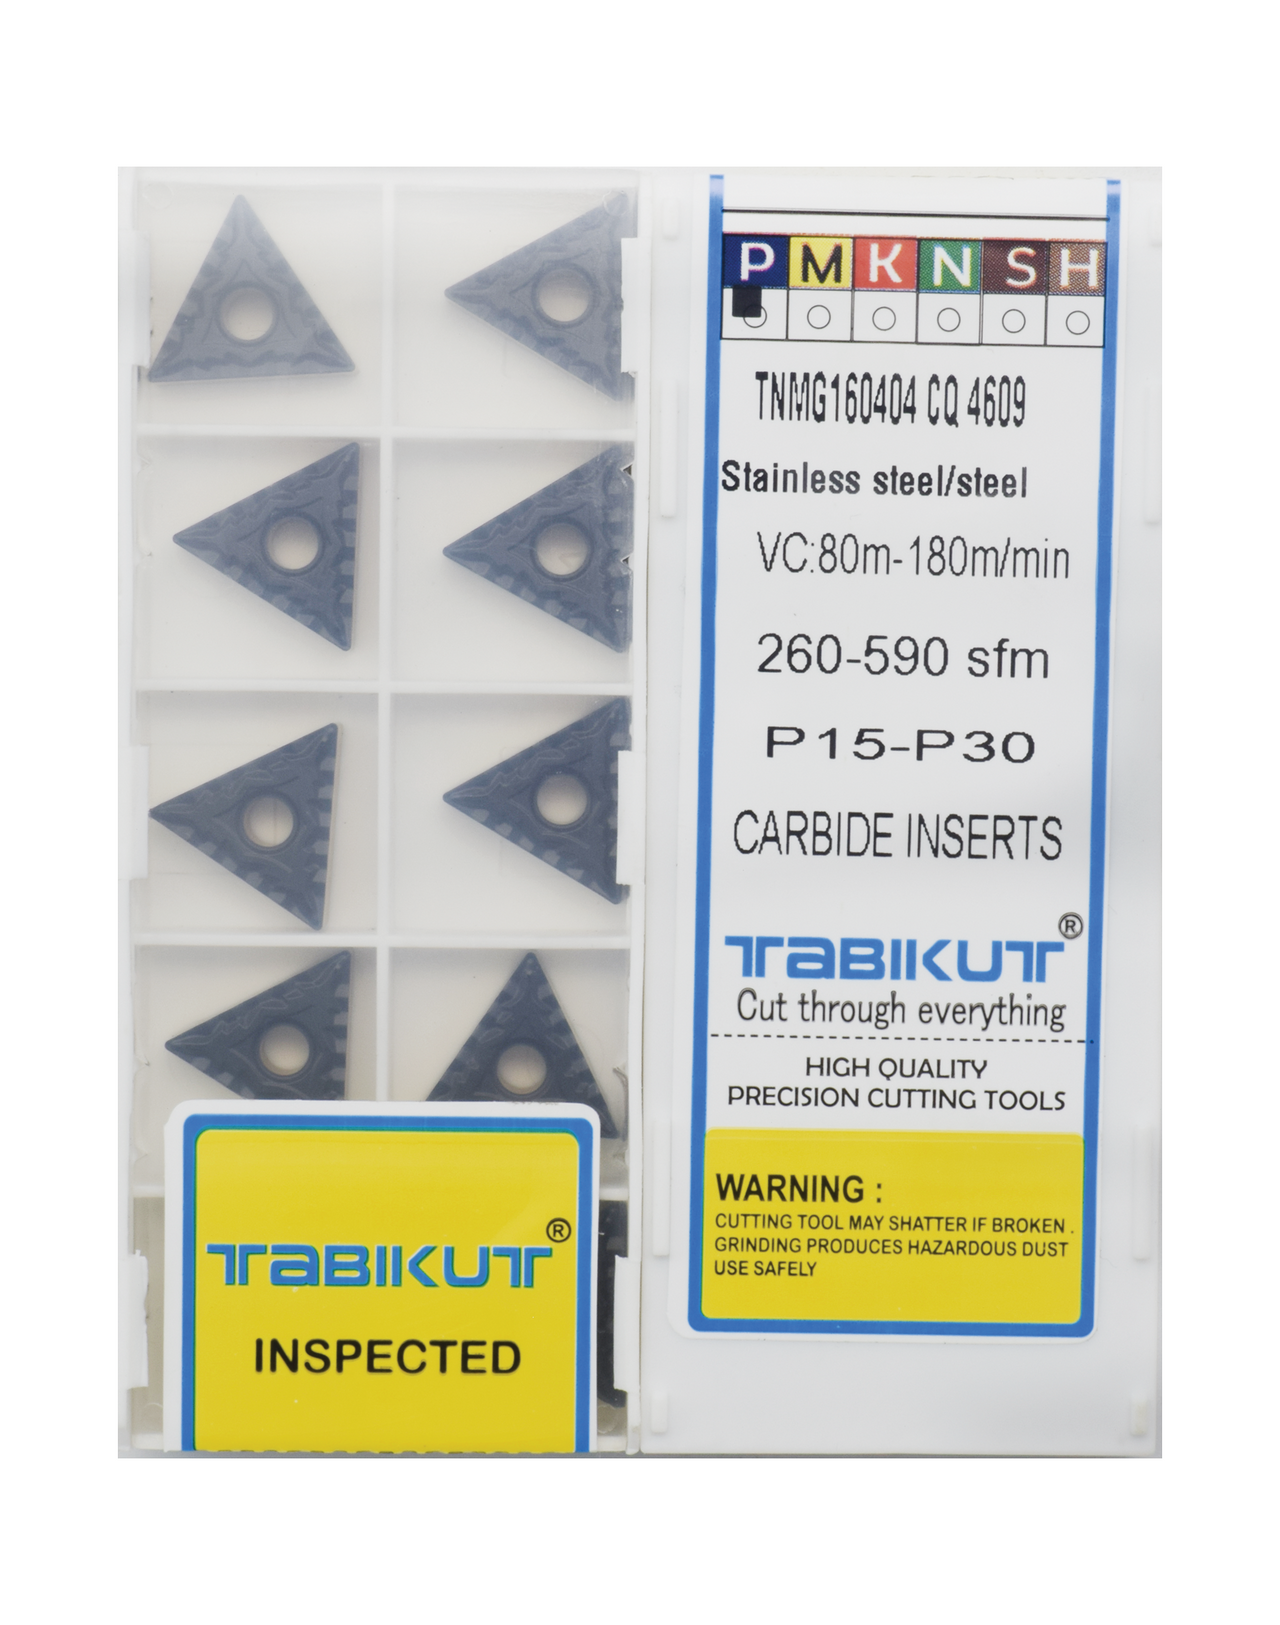 TNMG160404/08/12 CQ 4609 Chipbreaker Insert Steel Grade Of Tabikut Pack Of 10